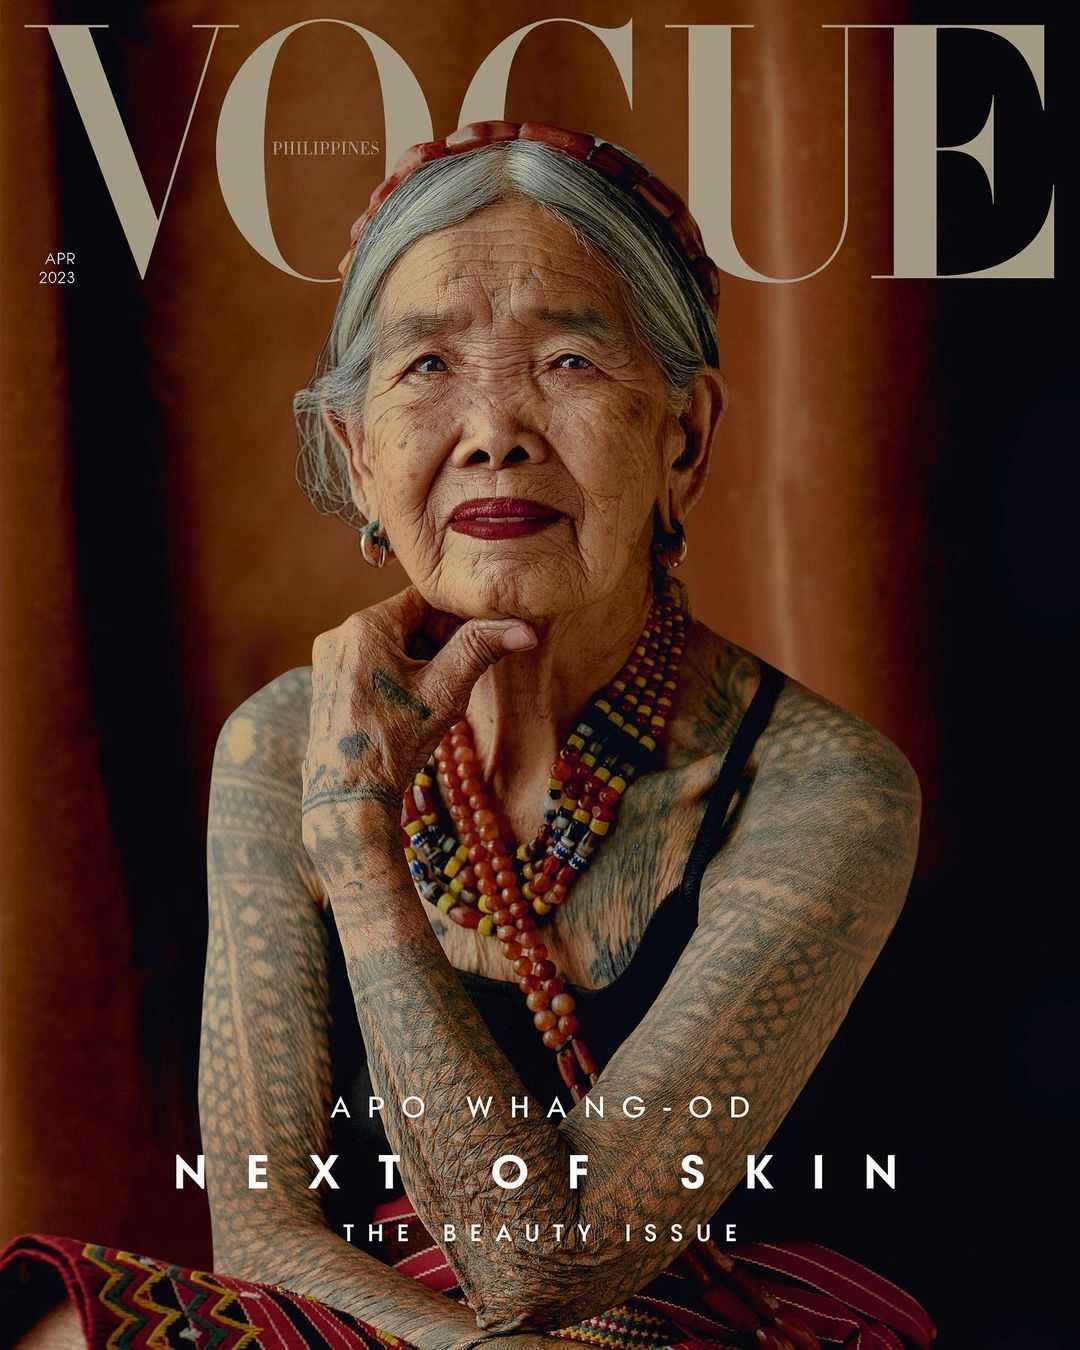 Mengenal Apo Whang-Od, Wanita Tertua yang Menghiasi Sampul Majalah Vogue